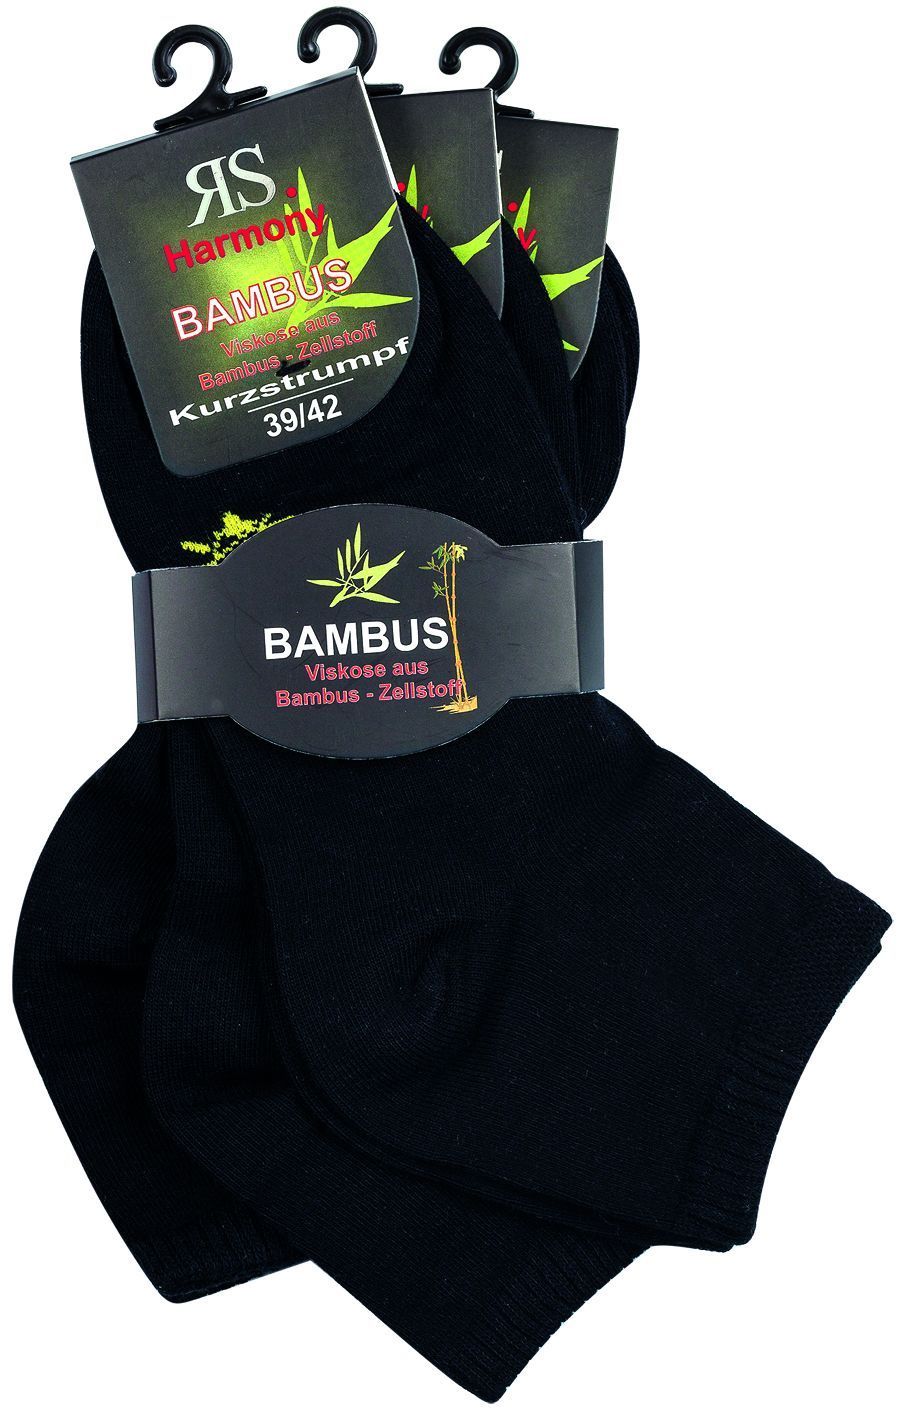 3-15 pairs of black bamboo viscose short socks, short stocking quarter socks